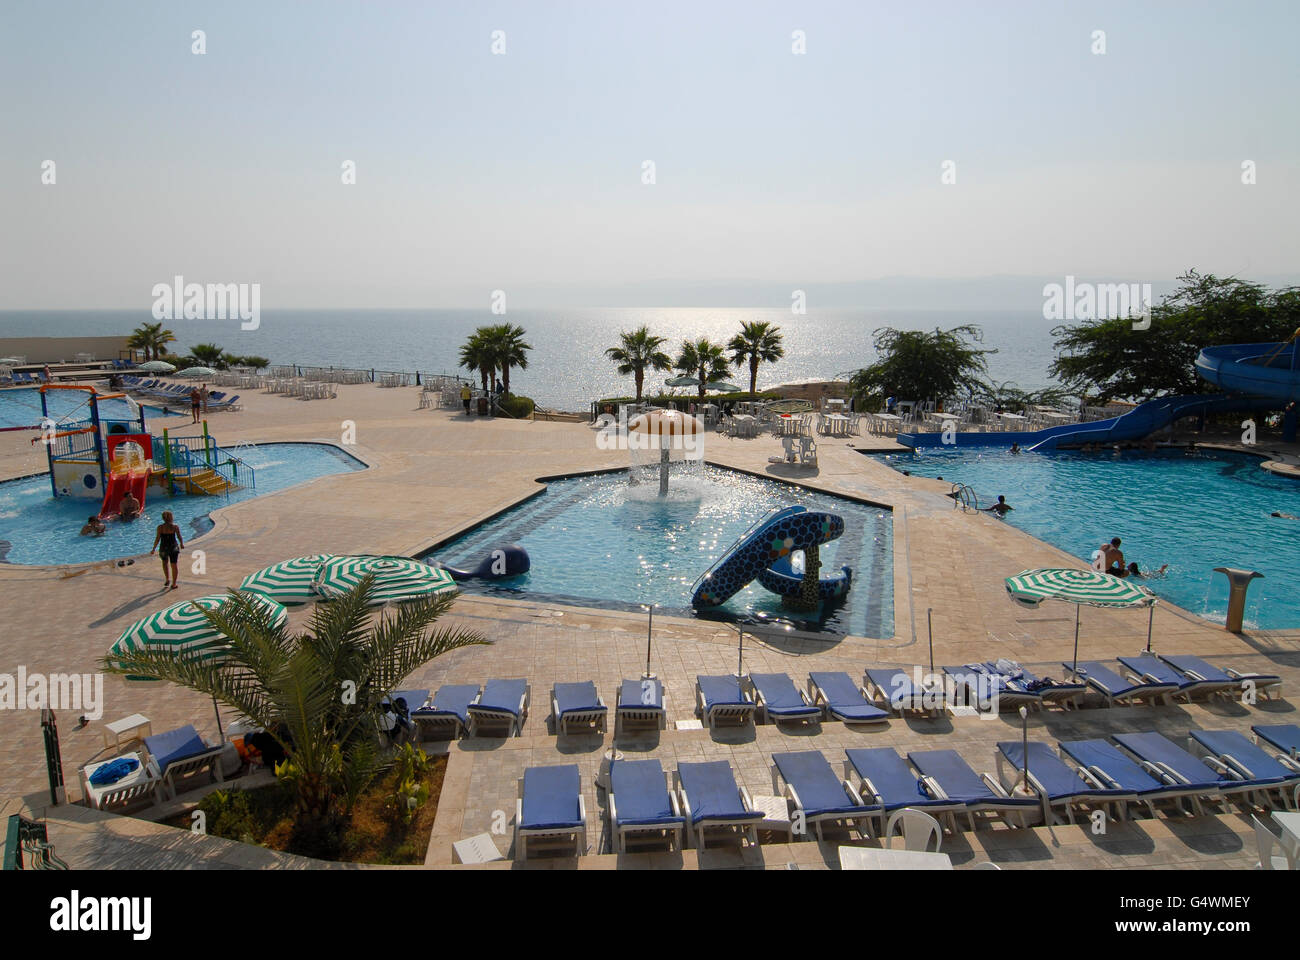 JORDAN , Dead Sea Spa Hotel at dead sea , beach resort with swimming pool,  the water level